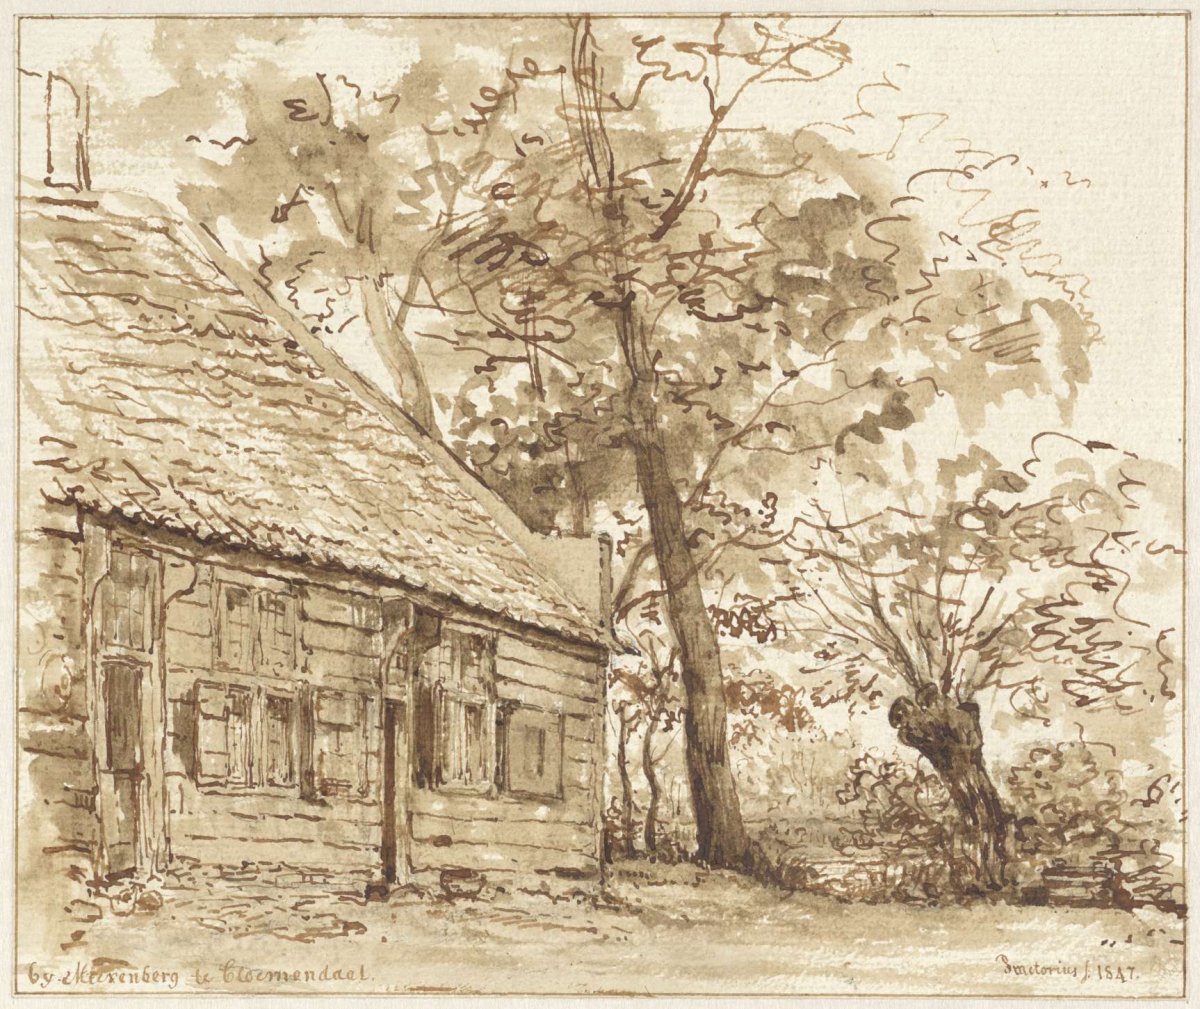 Farmhouse with trees, near Meerenberg in Bloemendaal, Pieter Ernst Hendrik Praetorius, 1847